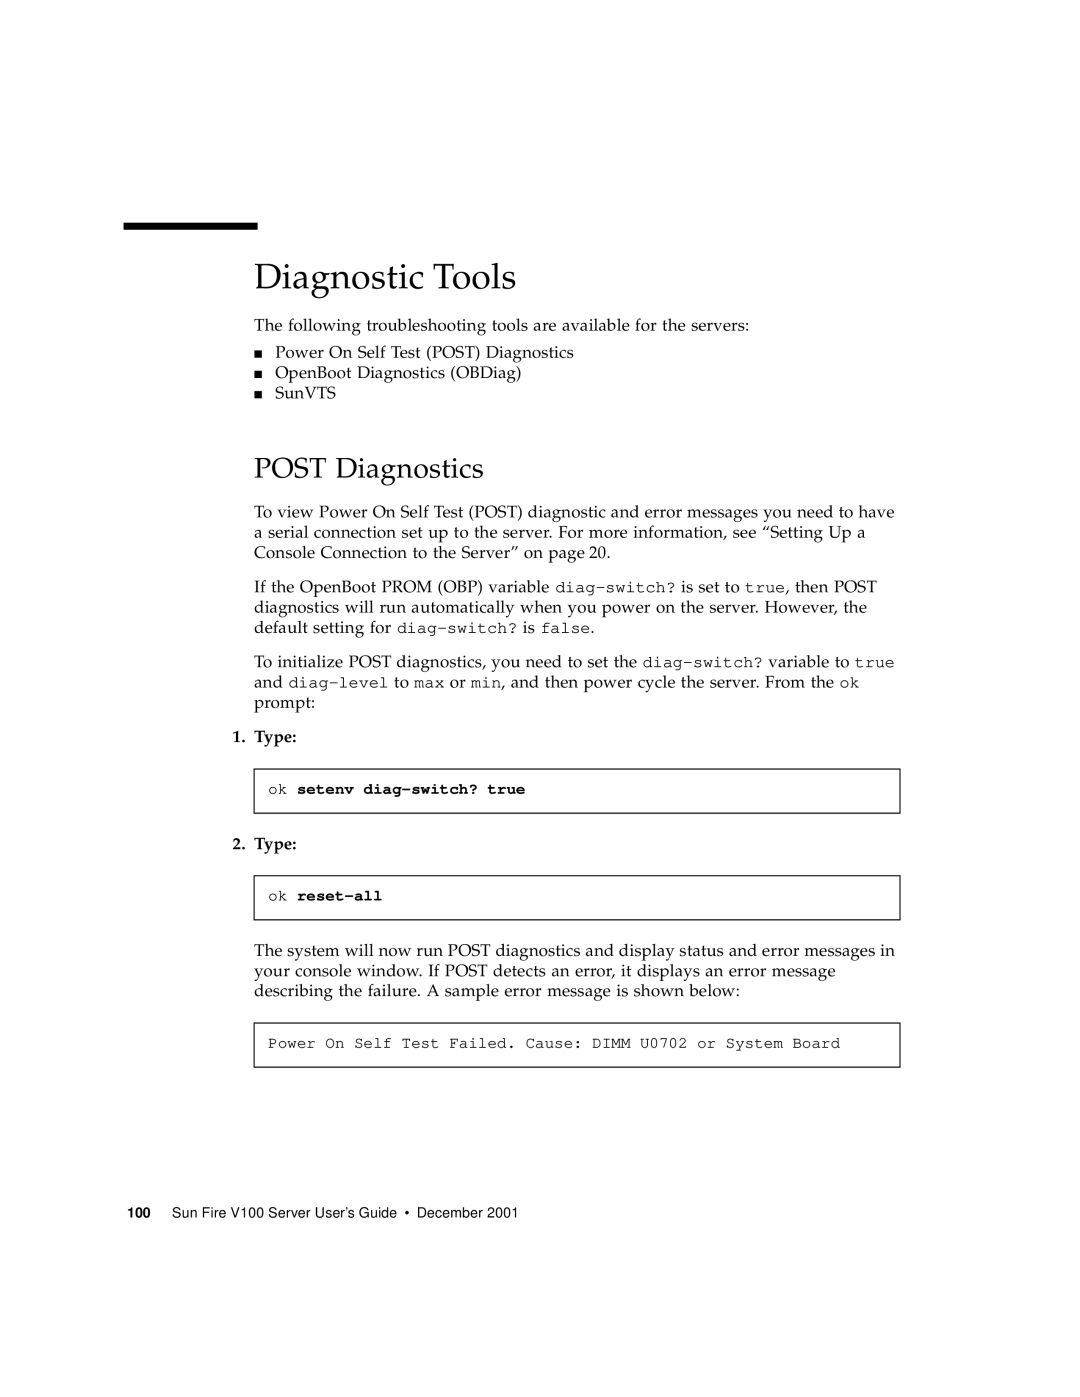 Sun Microsystems Sun Fire V100 manual Diagnostic Tools, POST Diagnostics, Type 